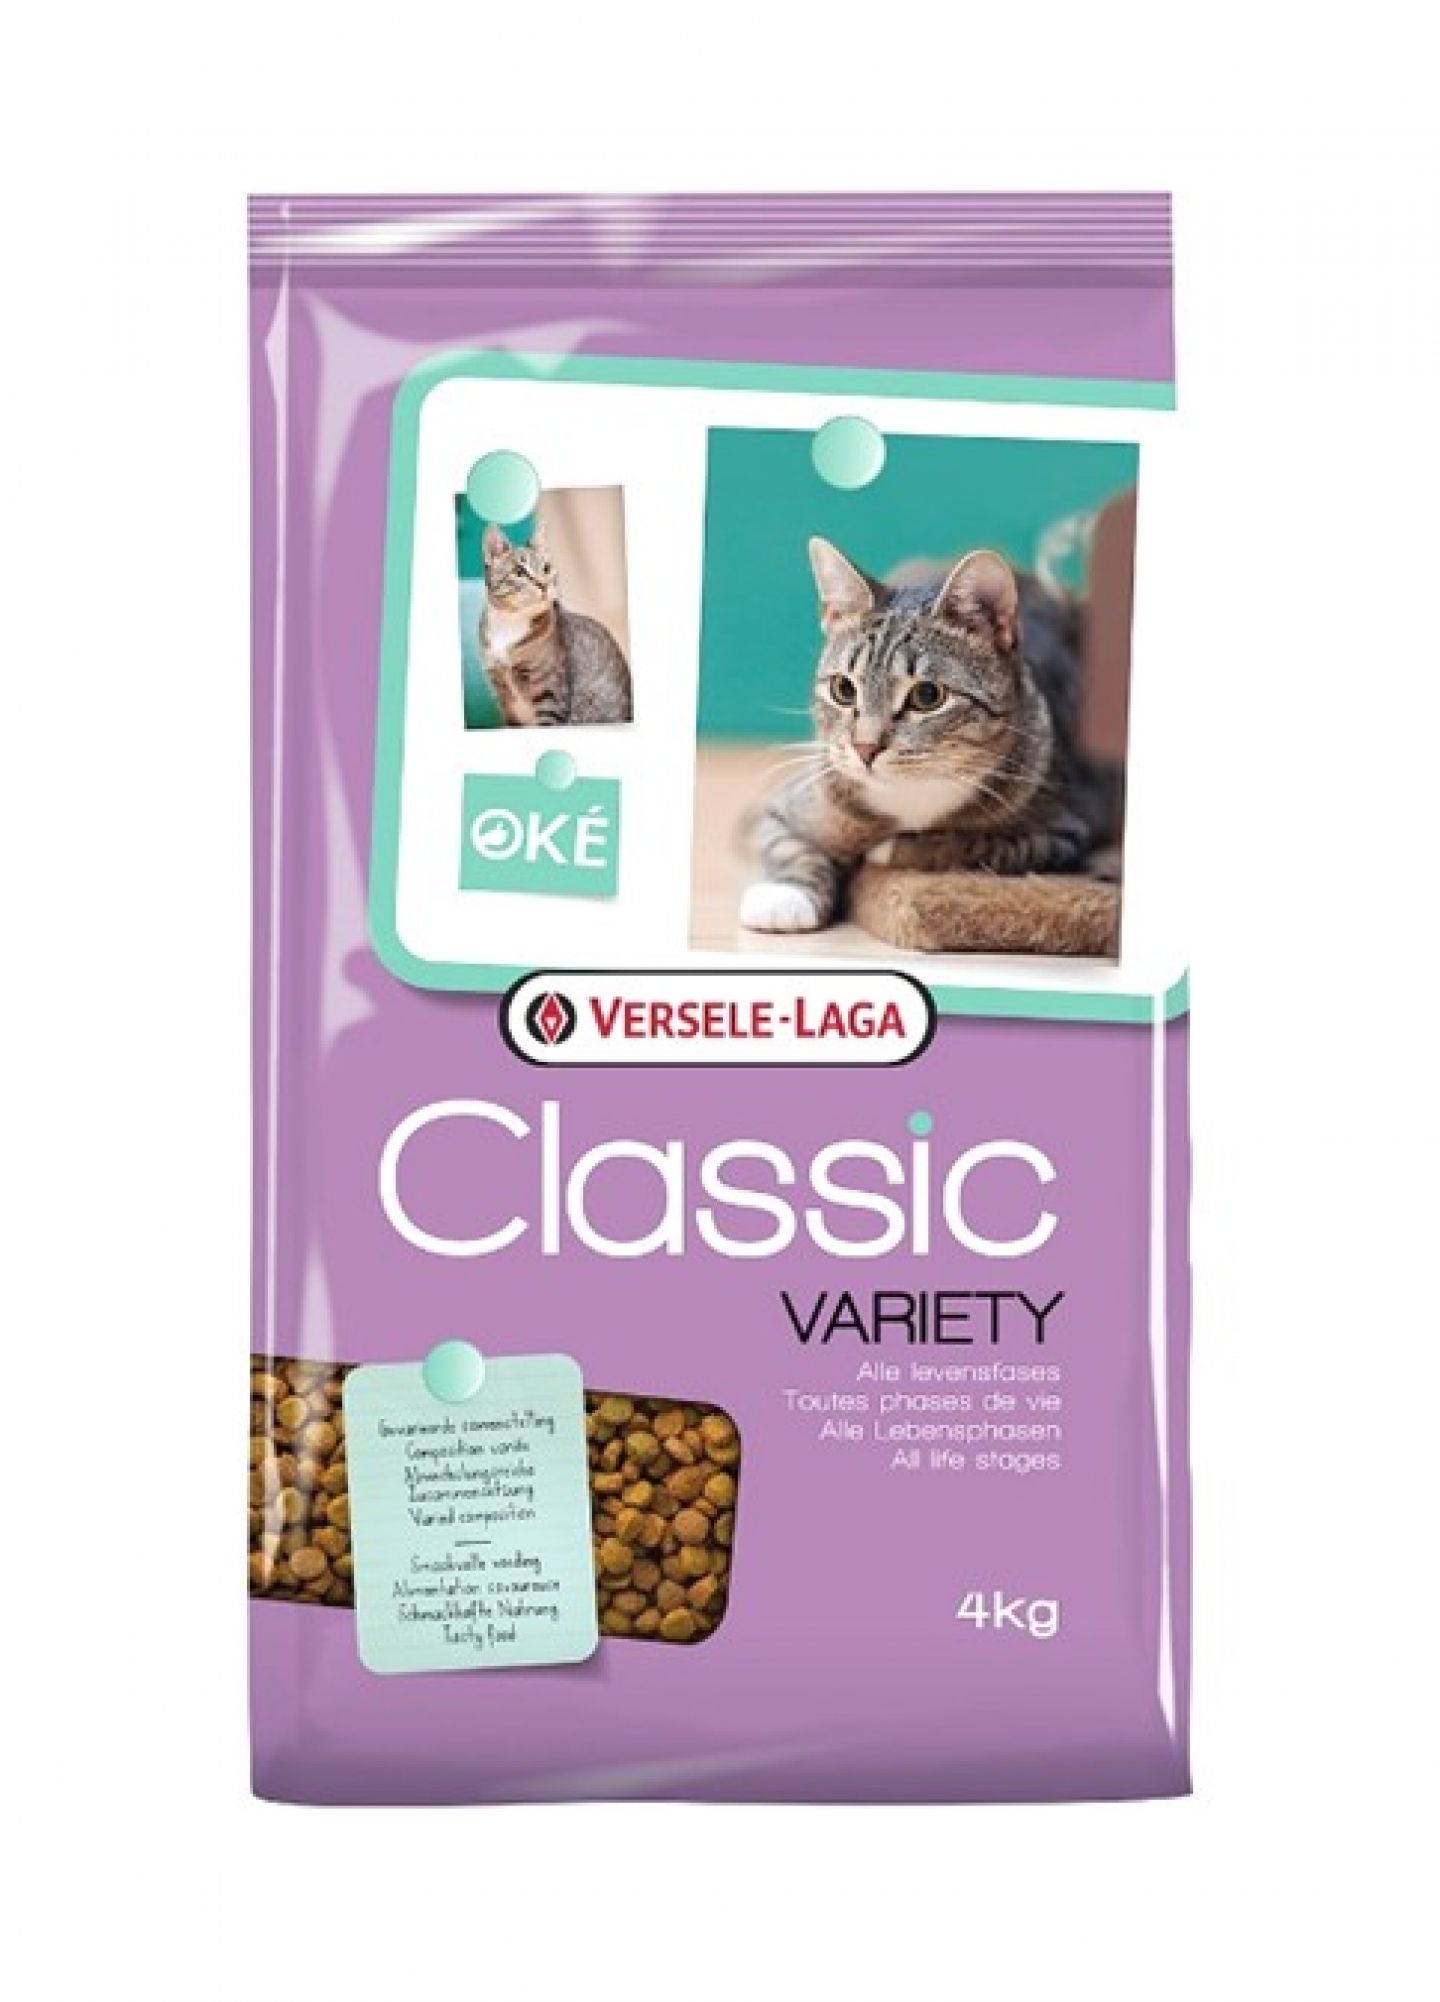 Versele-Laga Oke Classic Cat Variety, 4 kg CAT